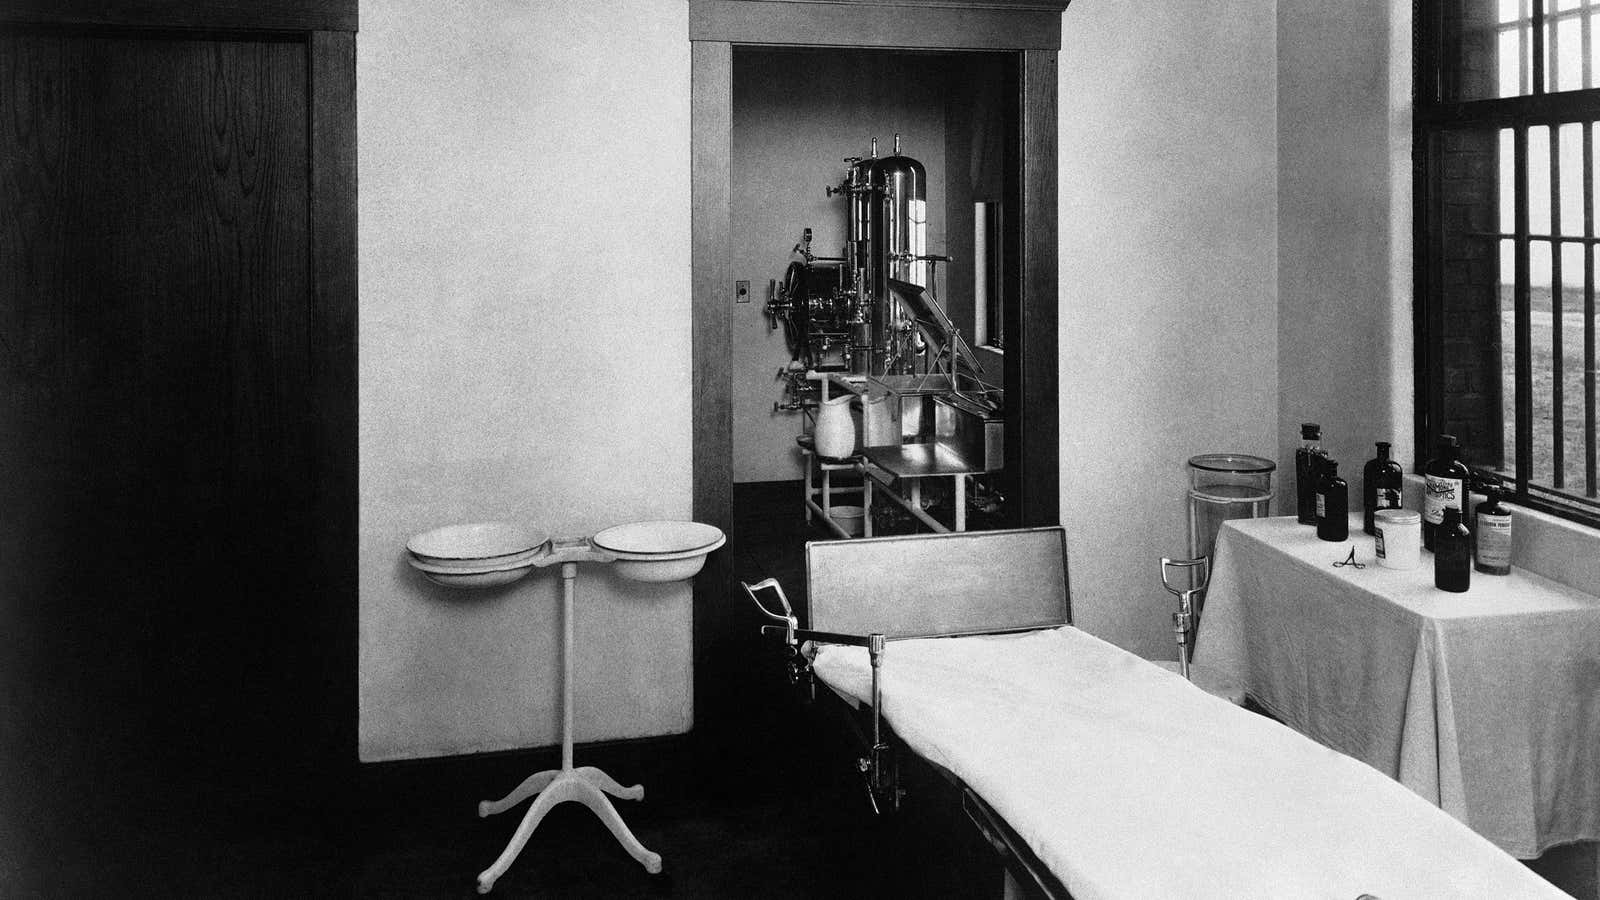 Sterilization rooms are part of eugenics’ dark history.